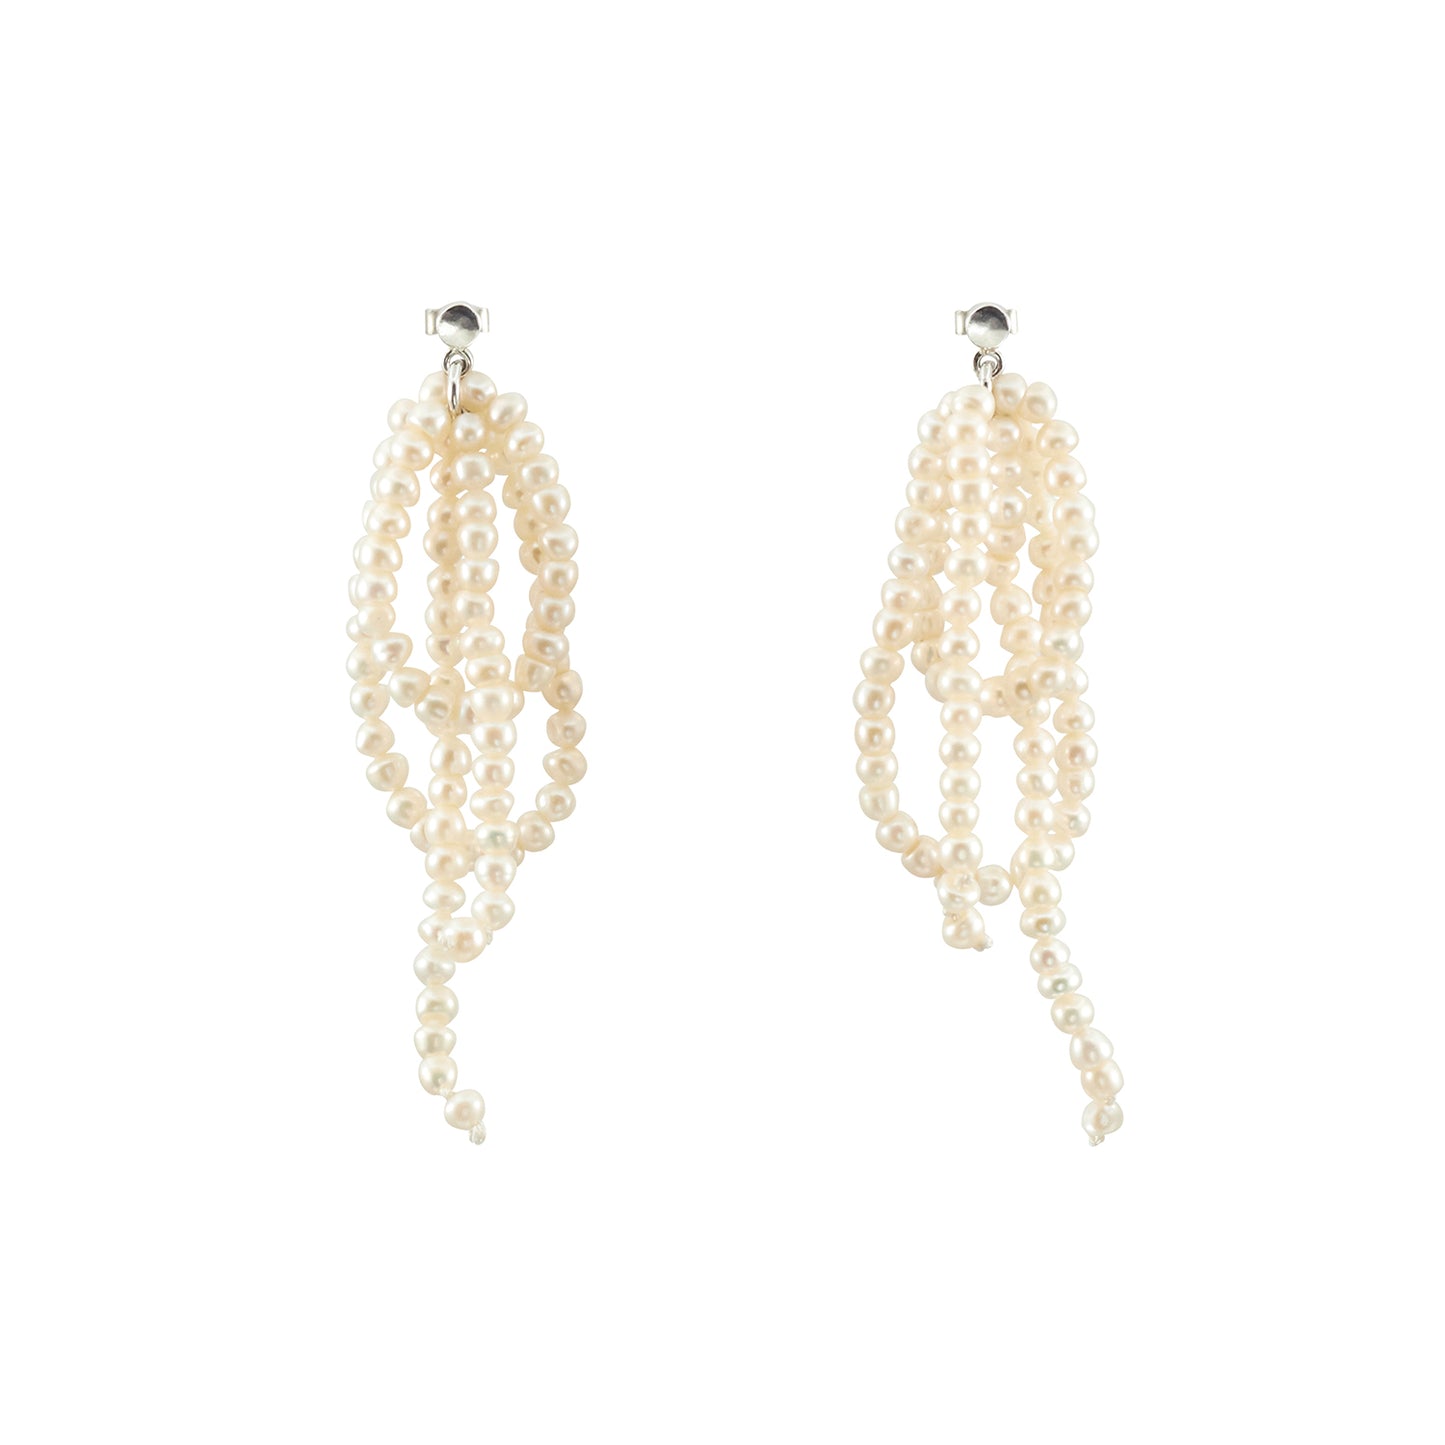 Gathered Loop Earrings with Freshwater Pearls